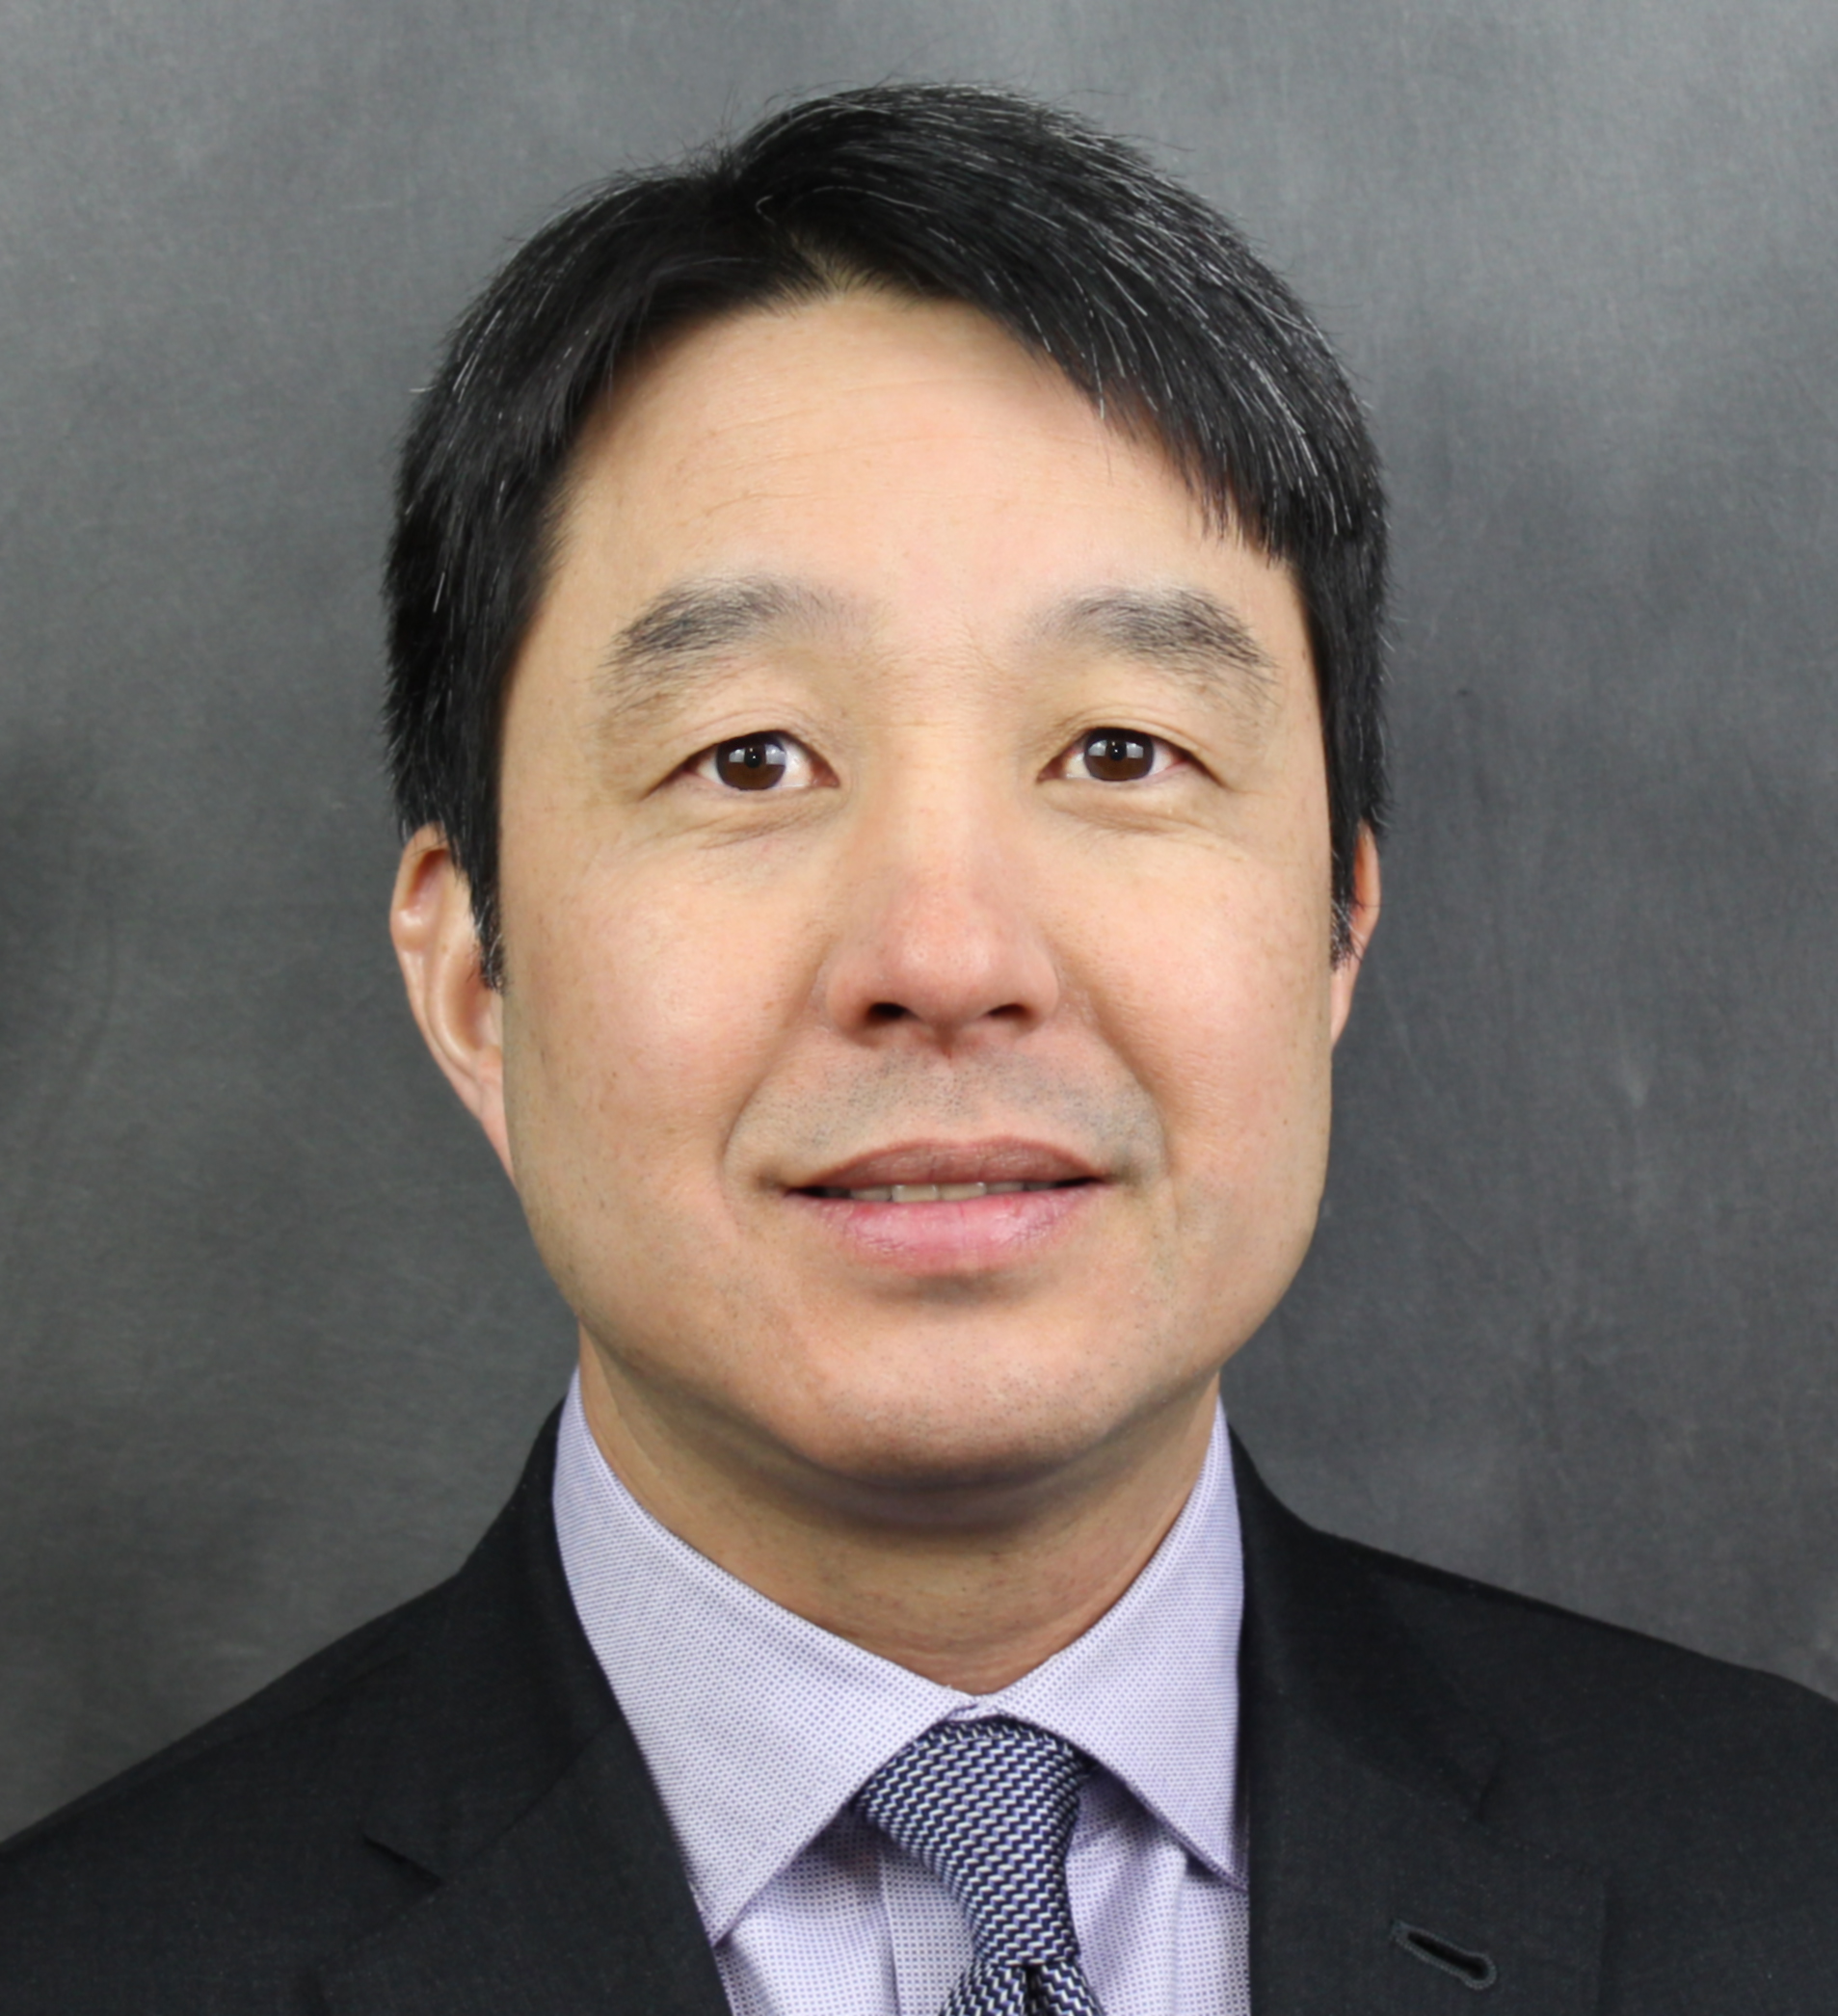 ARPA-E Program Director Scott Hsu Headshot